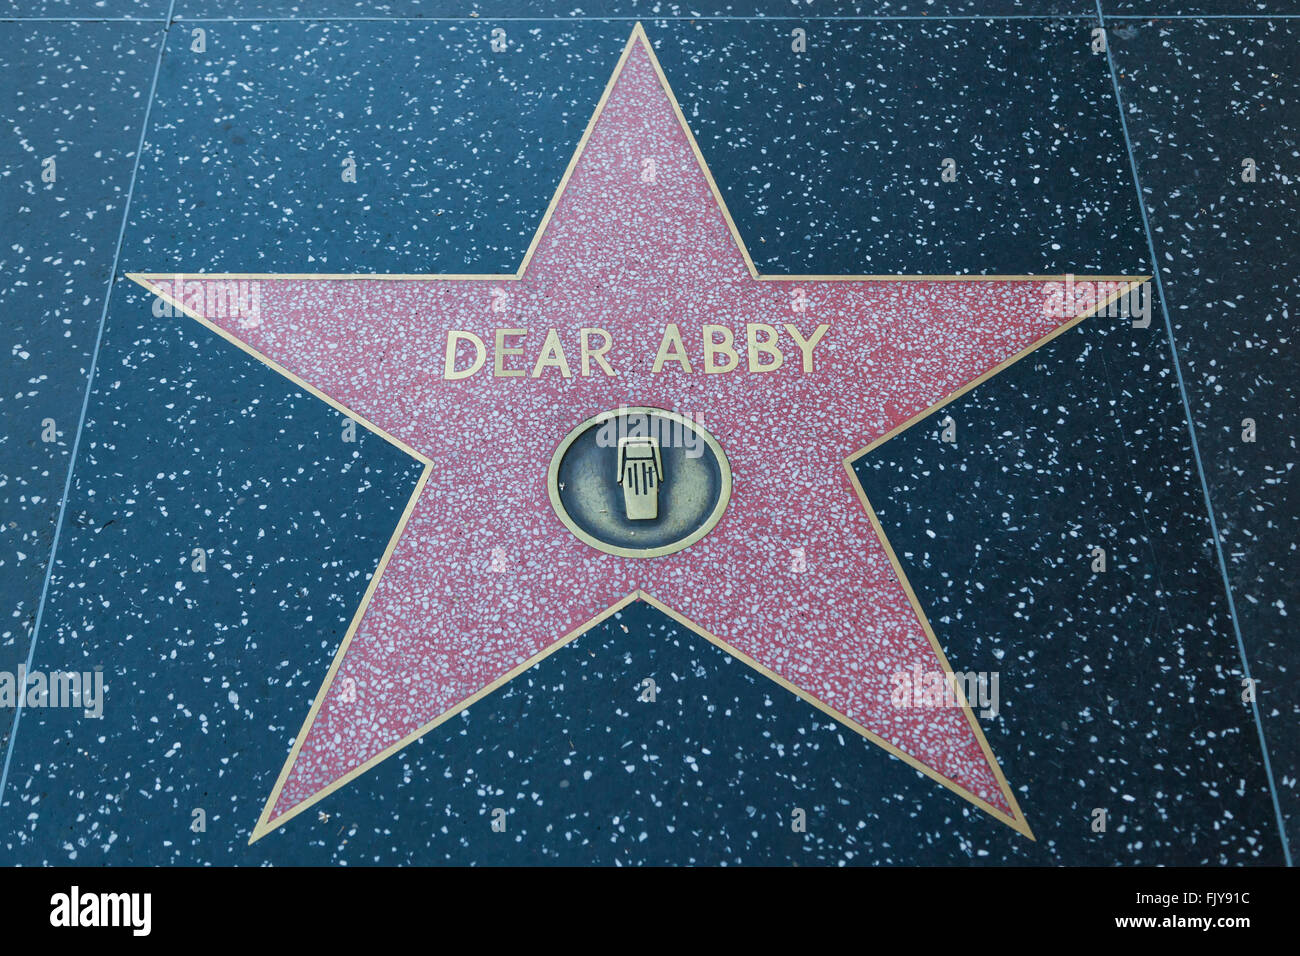 HOLLYWOOD, CALIFORNIA - February 8 2015: Dear Abby's Hollywood Walk of Fame star on February 8, 2015 in Hollywood, CA. Stock Photo